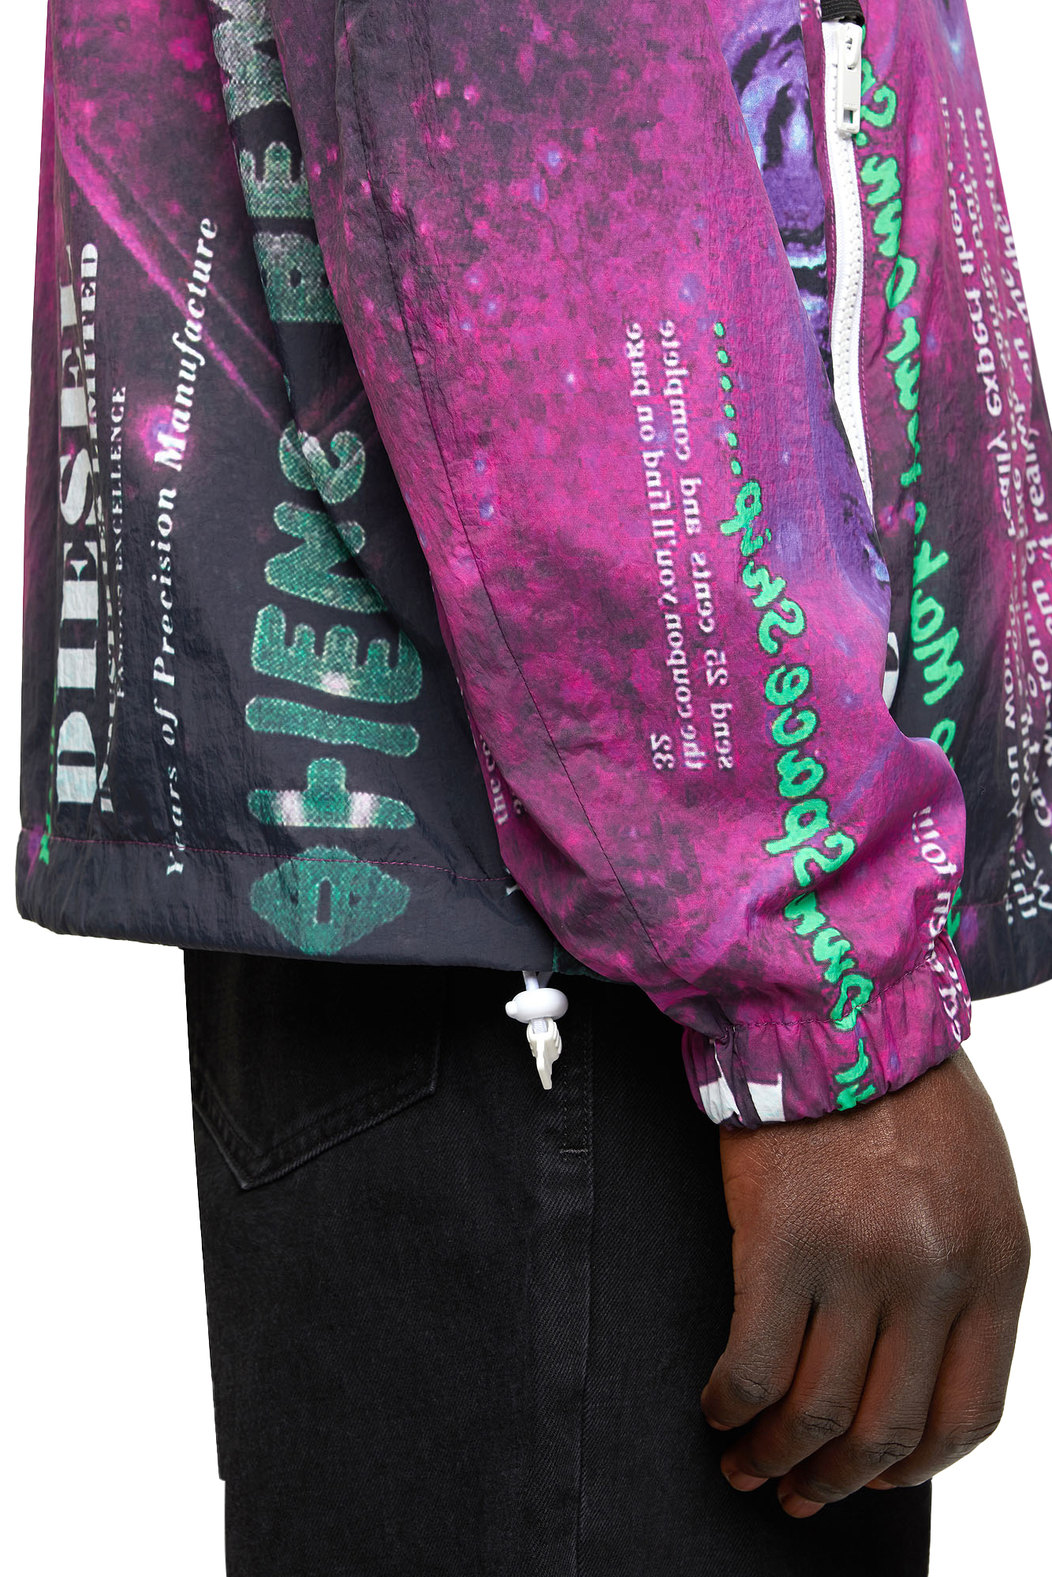 Nylon jacket with Digicosmos print